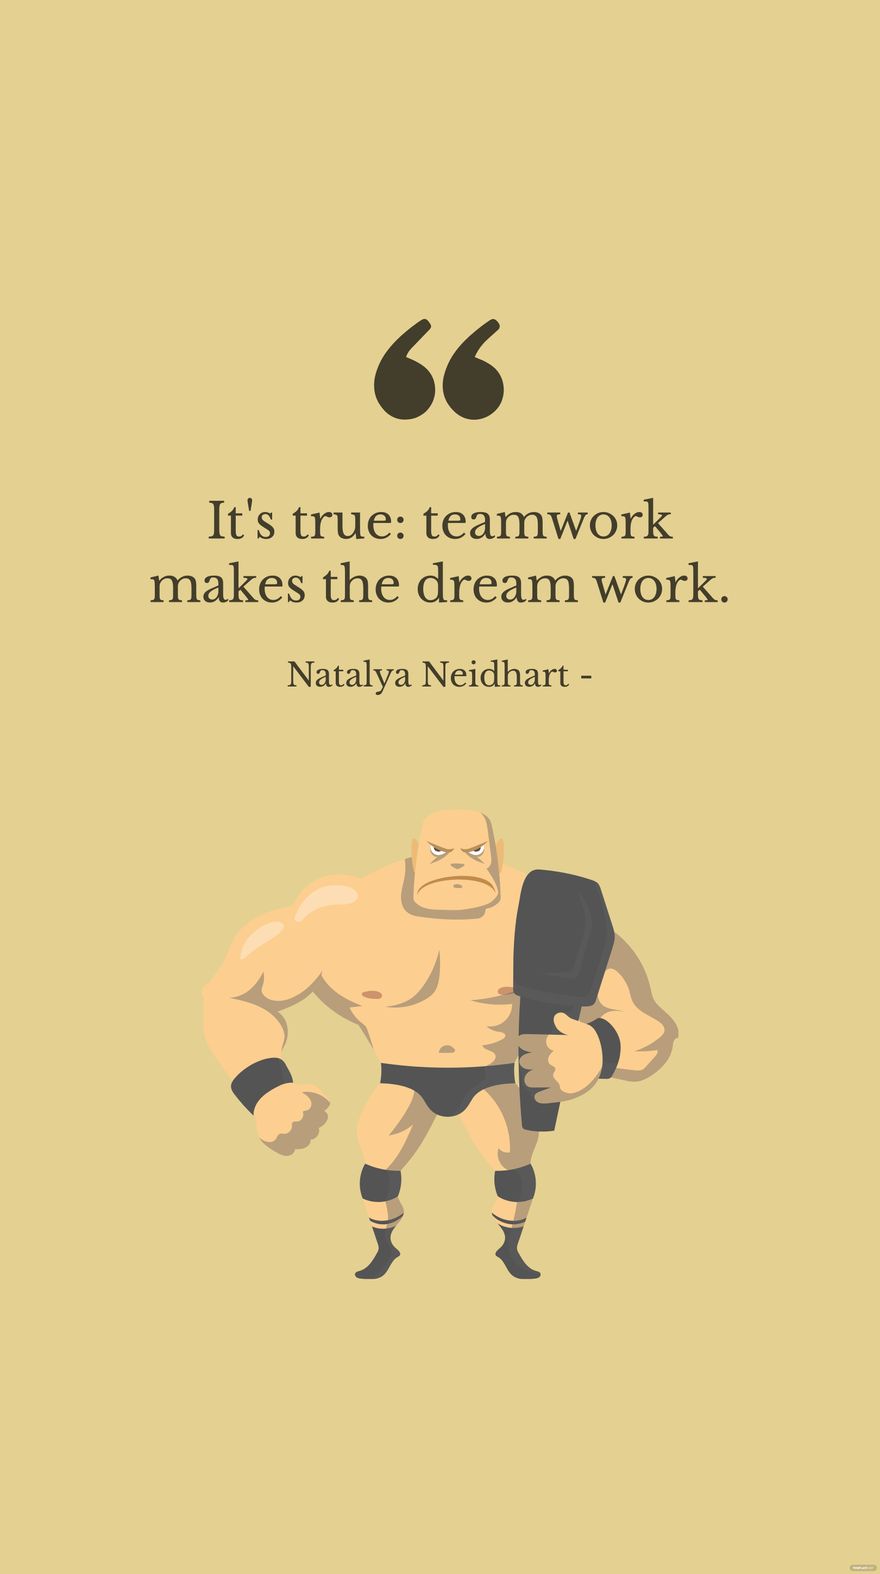 Natalya Neidhart - It's true: teamwork makes the dream work.